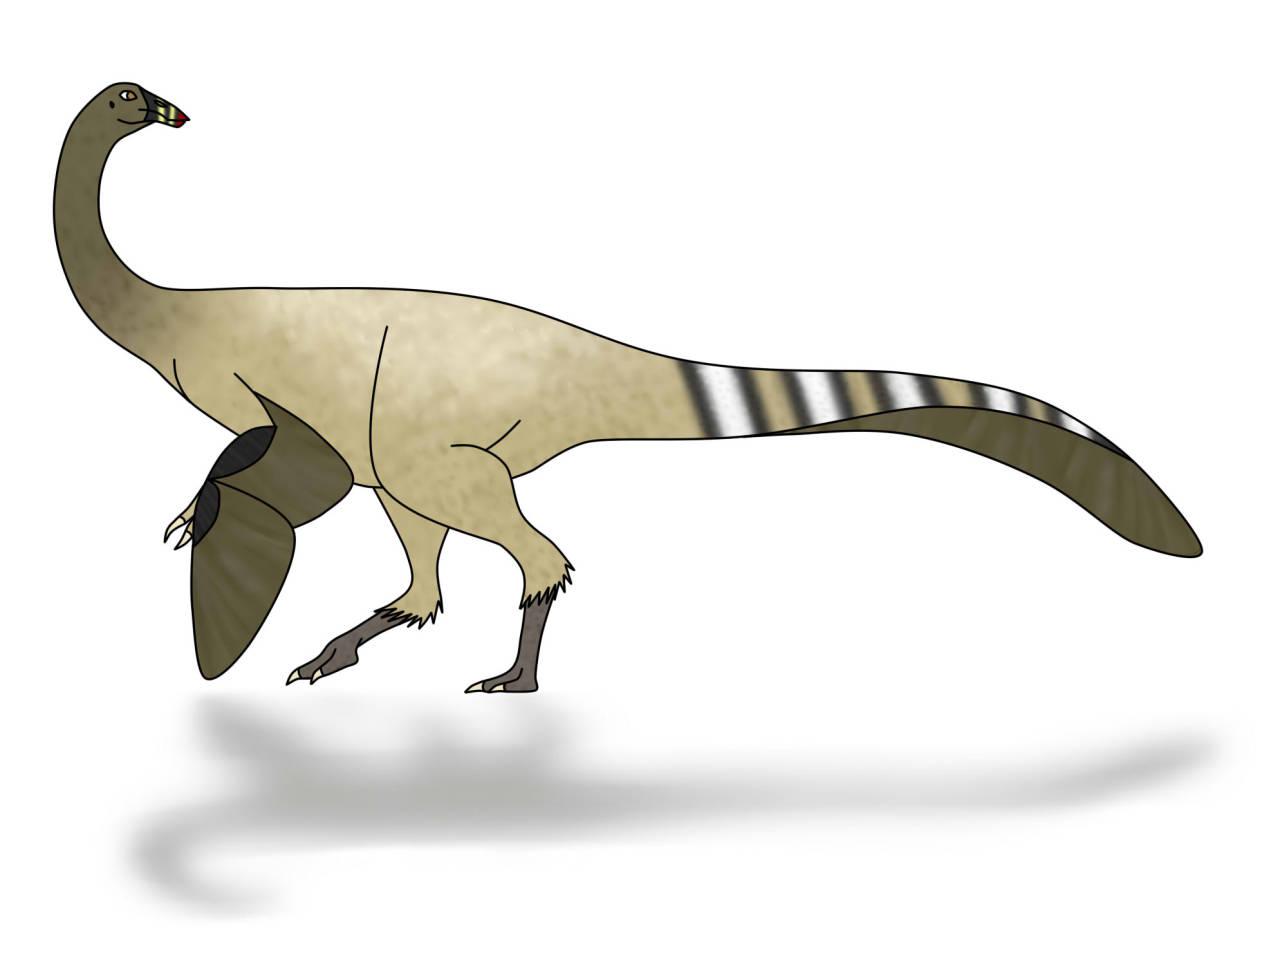 Orcomimus, Cretaceous
(Меловой период)